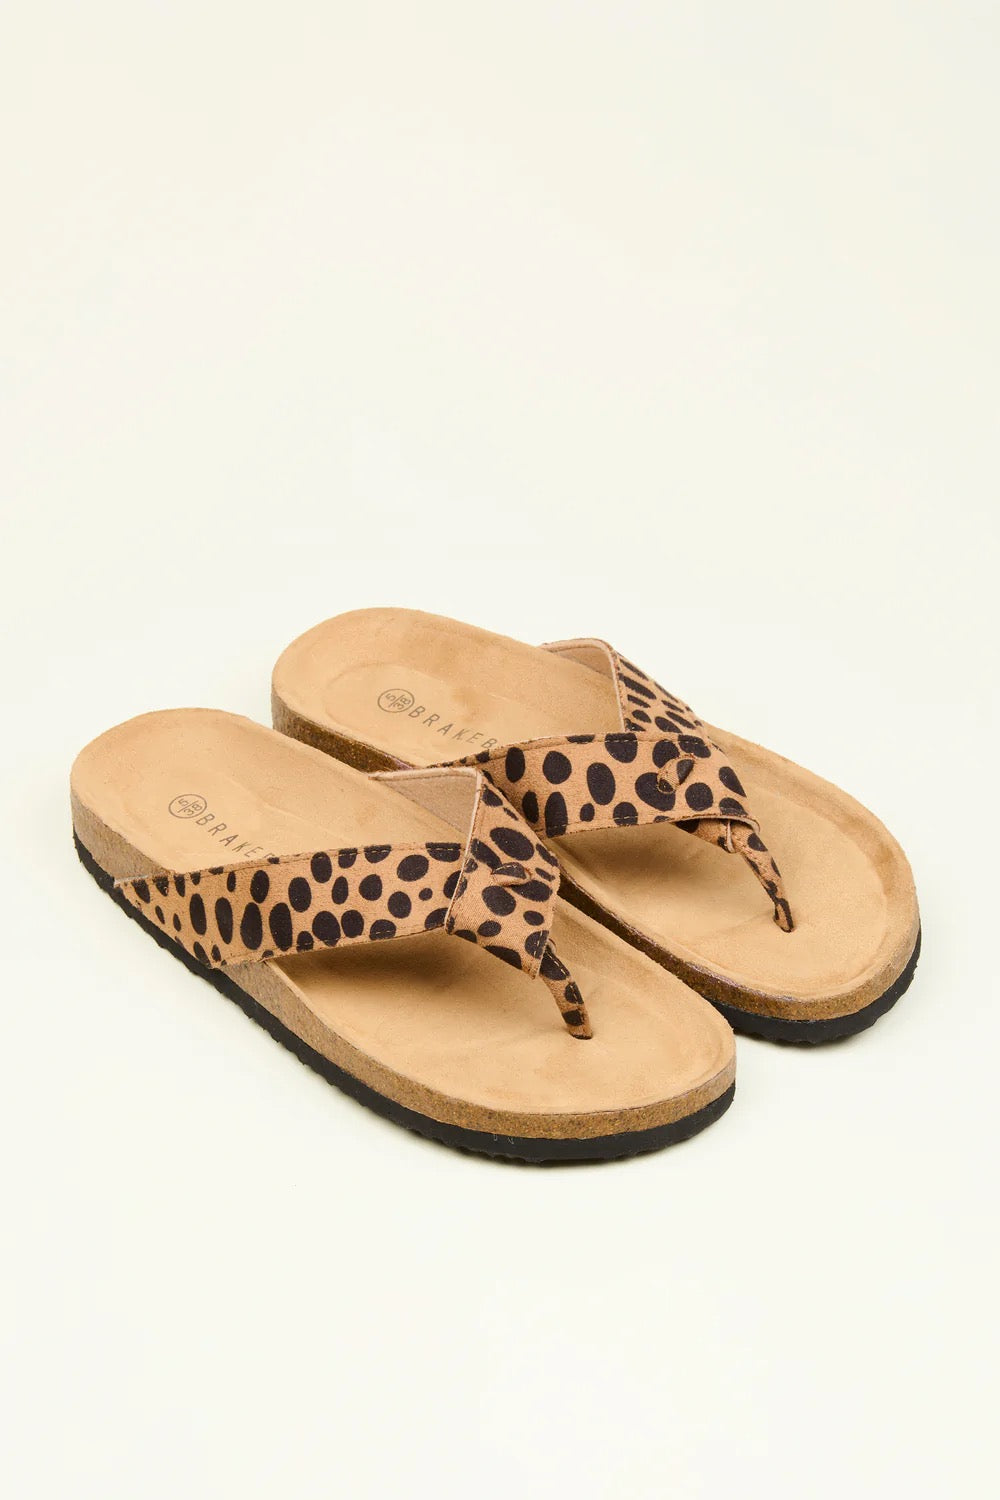 Brakeburn Women's Animal Spot Sandals - Tan/Black